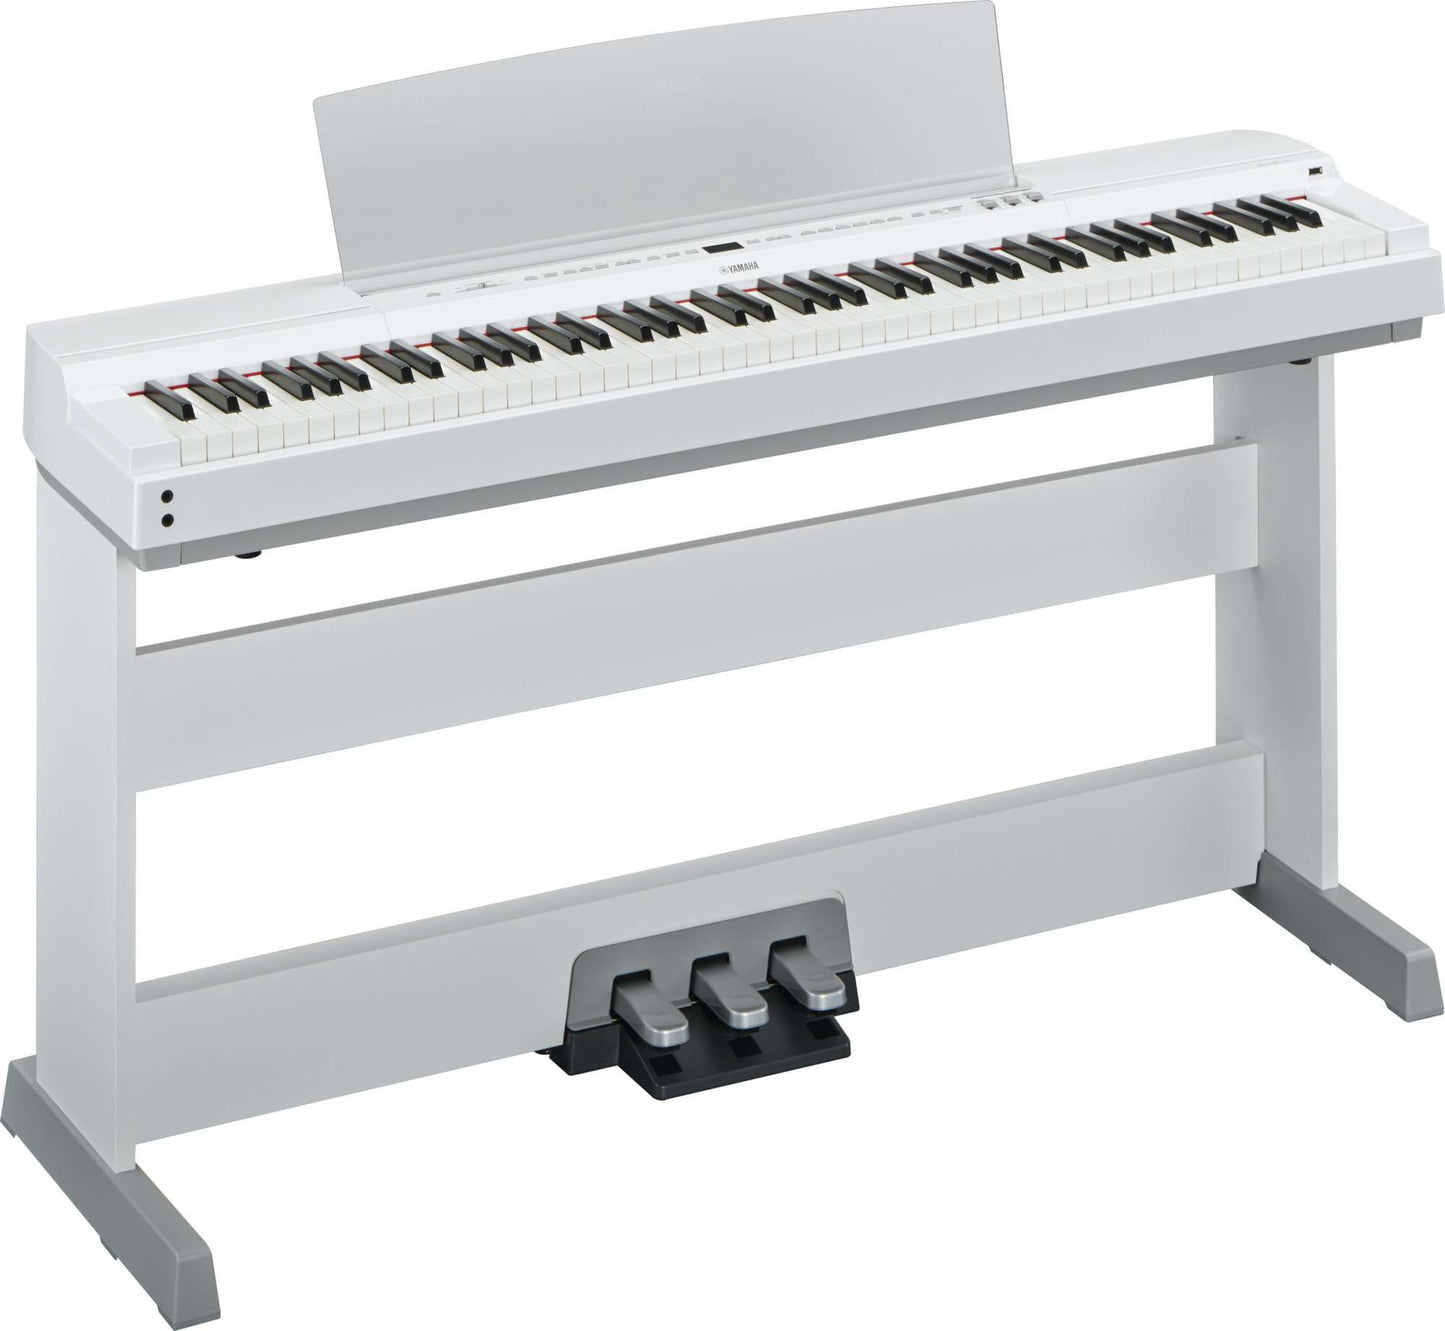 Yamaha P-255 Digital Piano